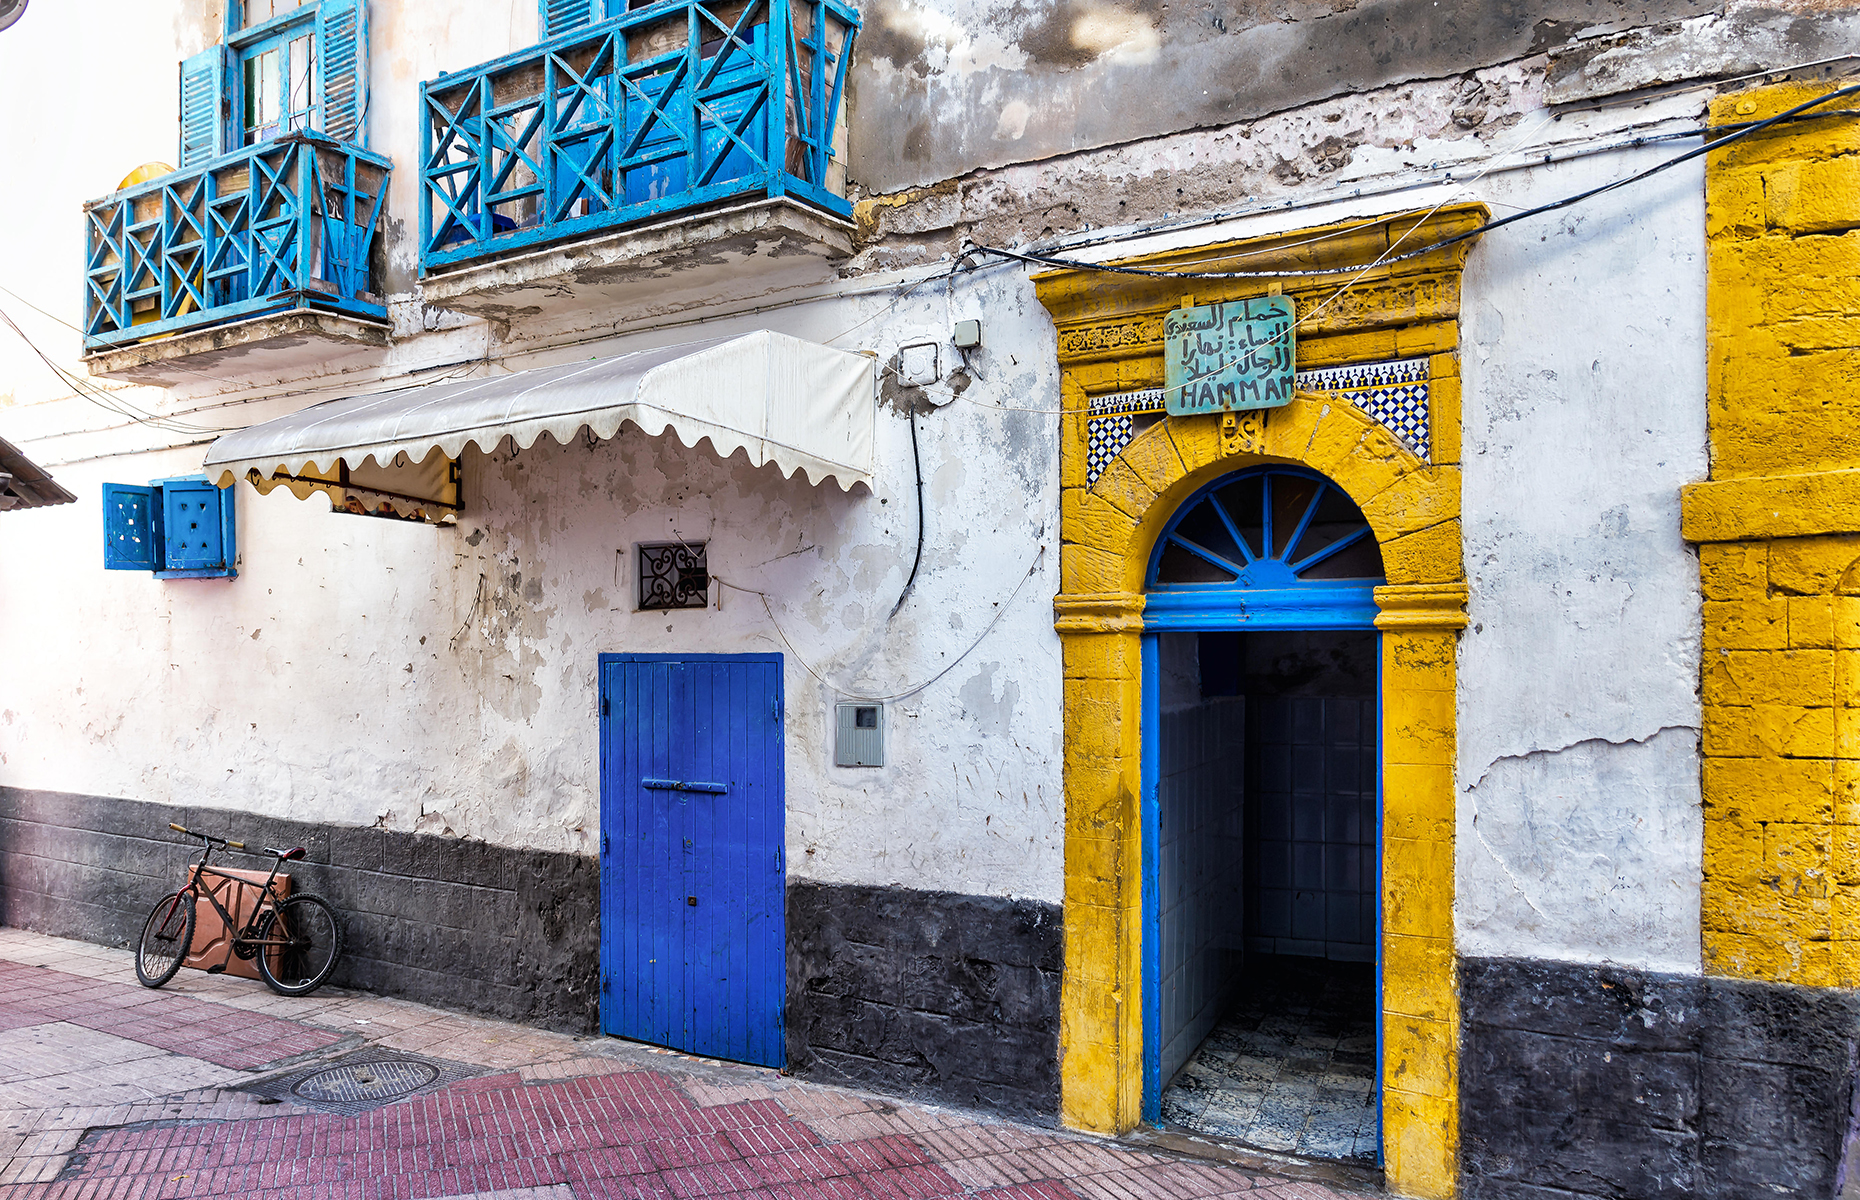 Hammam in Essaouira, Morocco. (Image: Francesco Dazzi/Alamy Stock Photo)